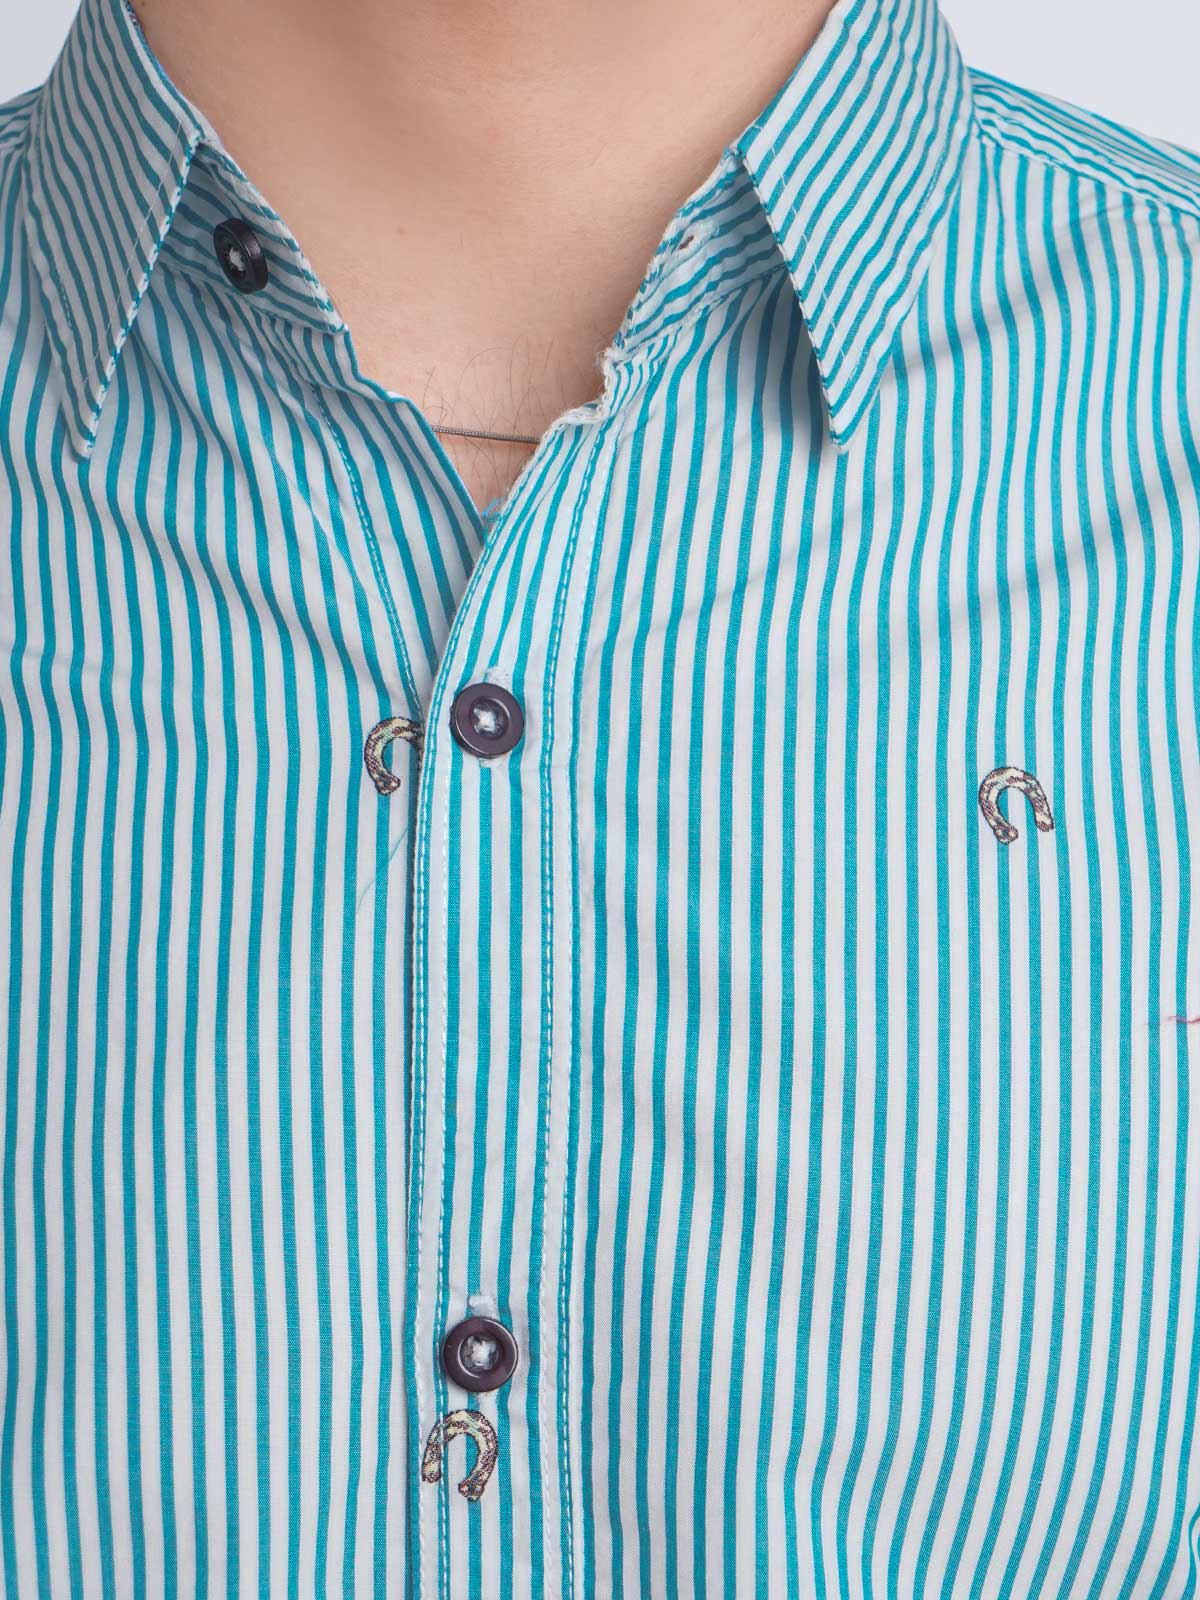 Blue & White Striped Printed Casual Shirt (CSP-163)